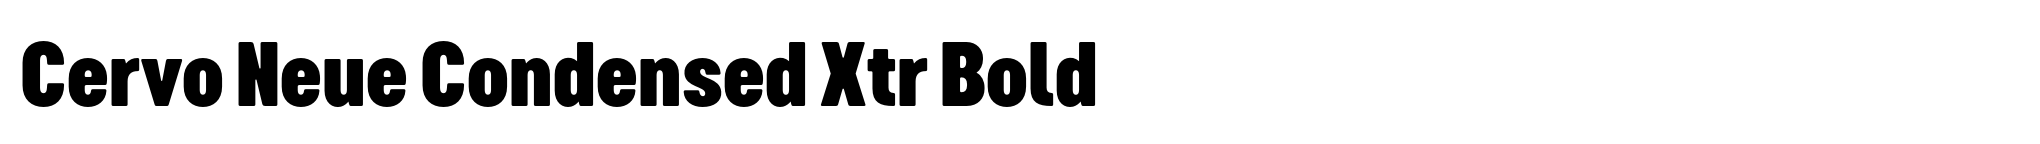 Cervo Neue Condensed Xtr Bold image